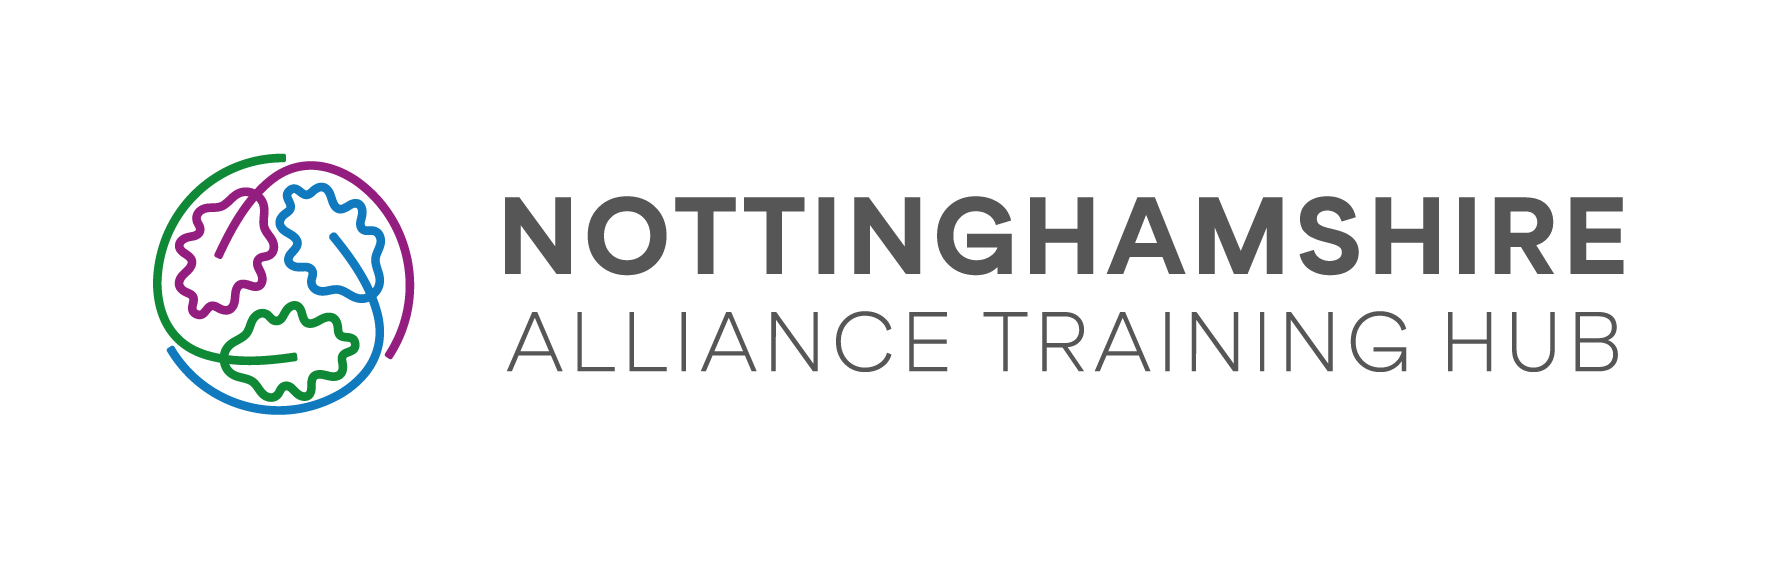 Nottinghamshire Alliance Training Hub (NATH)